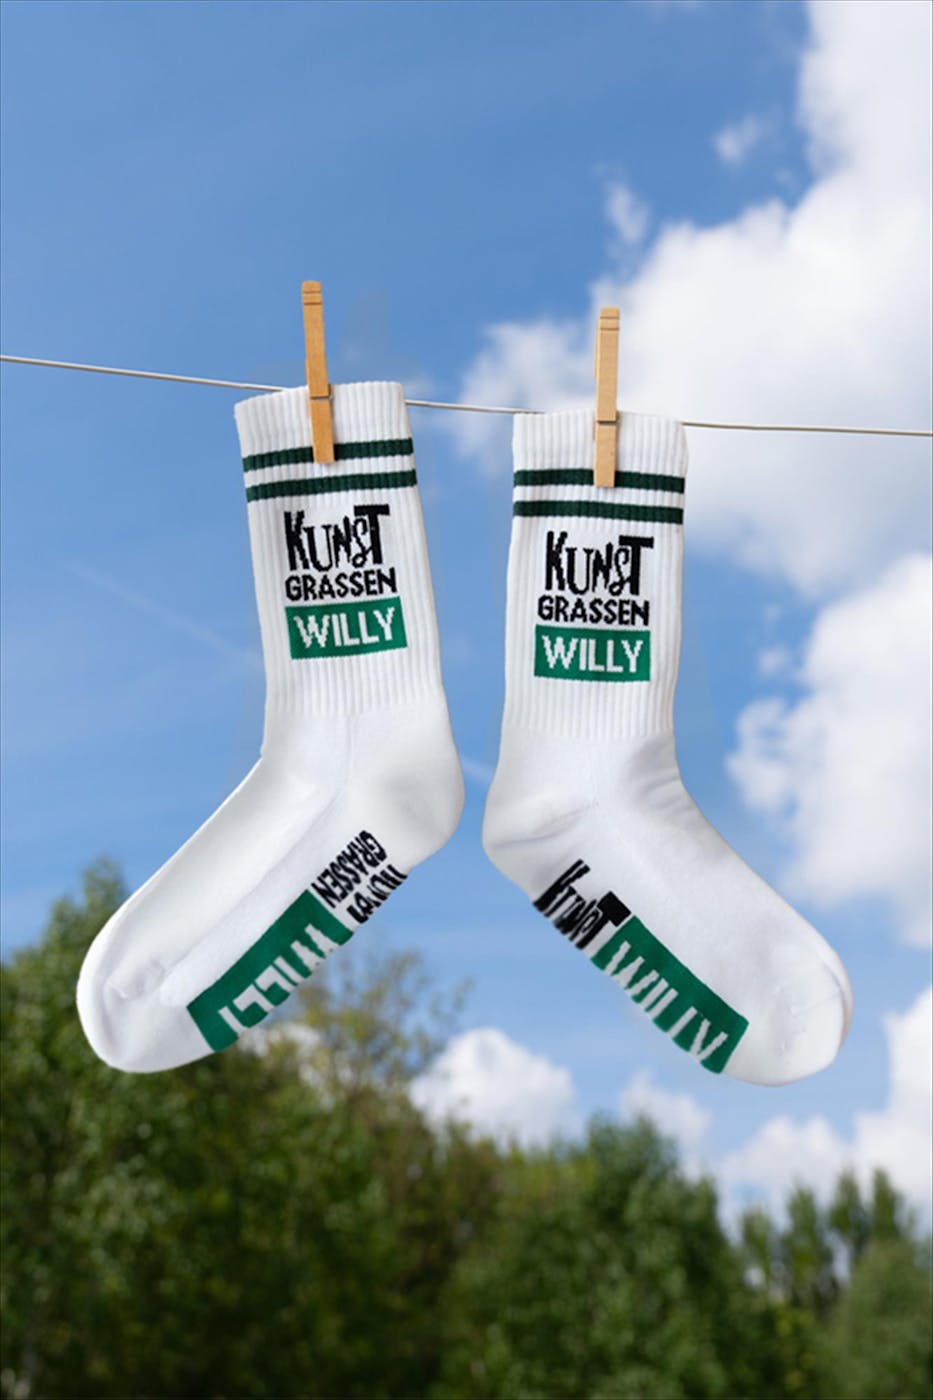 Brooklyn - Witte Kunstgrassen Willy Nonkels sokken